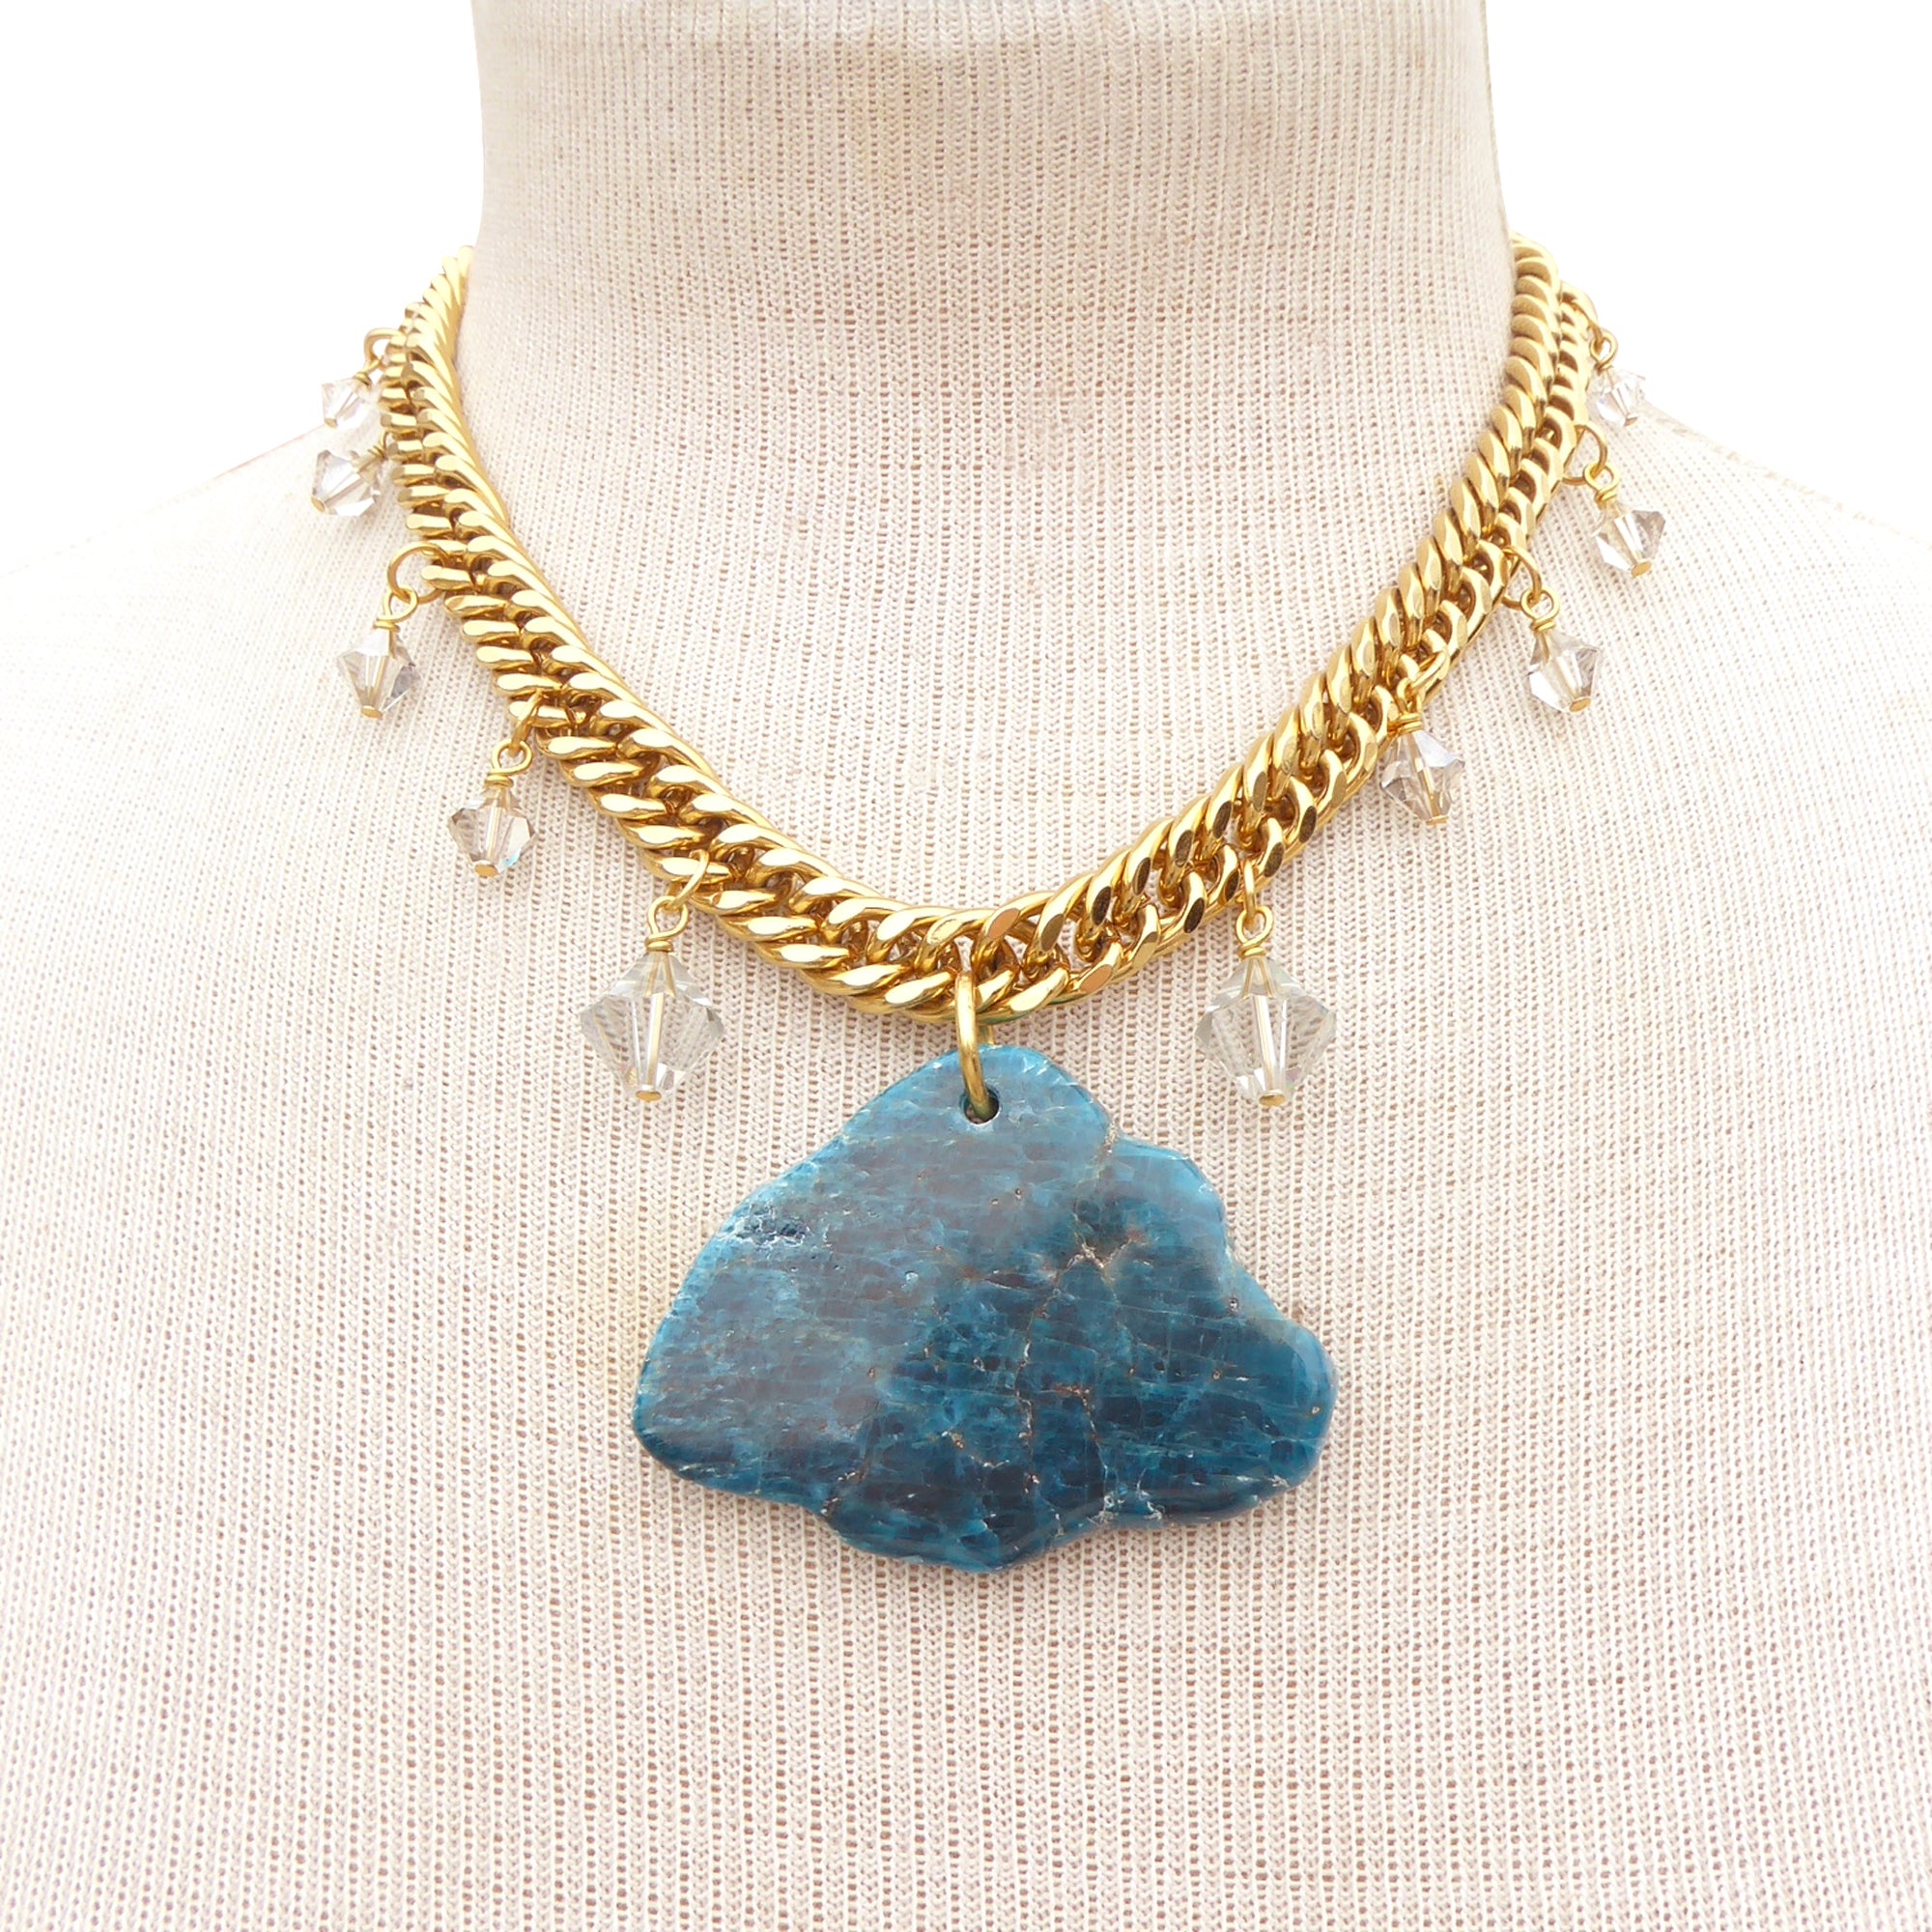 Rainy day blue apatite necklace